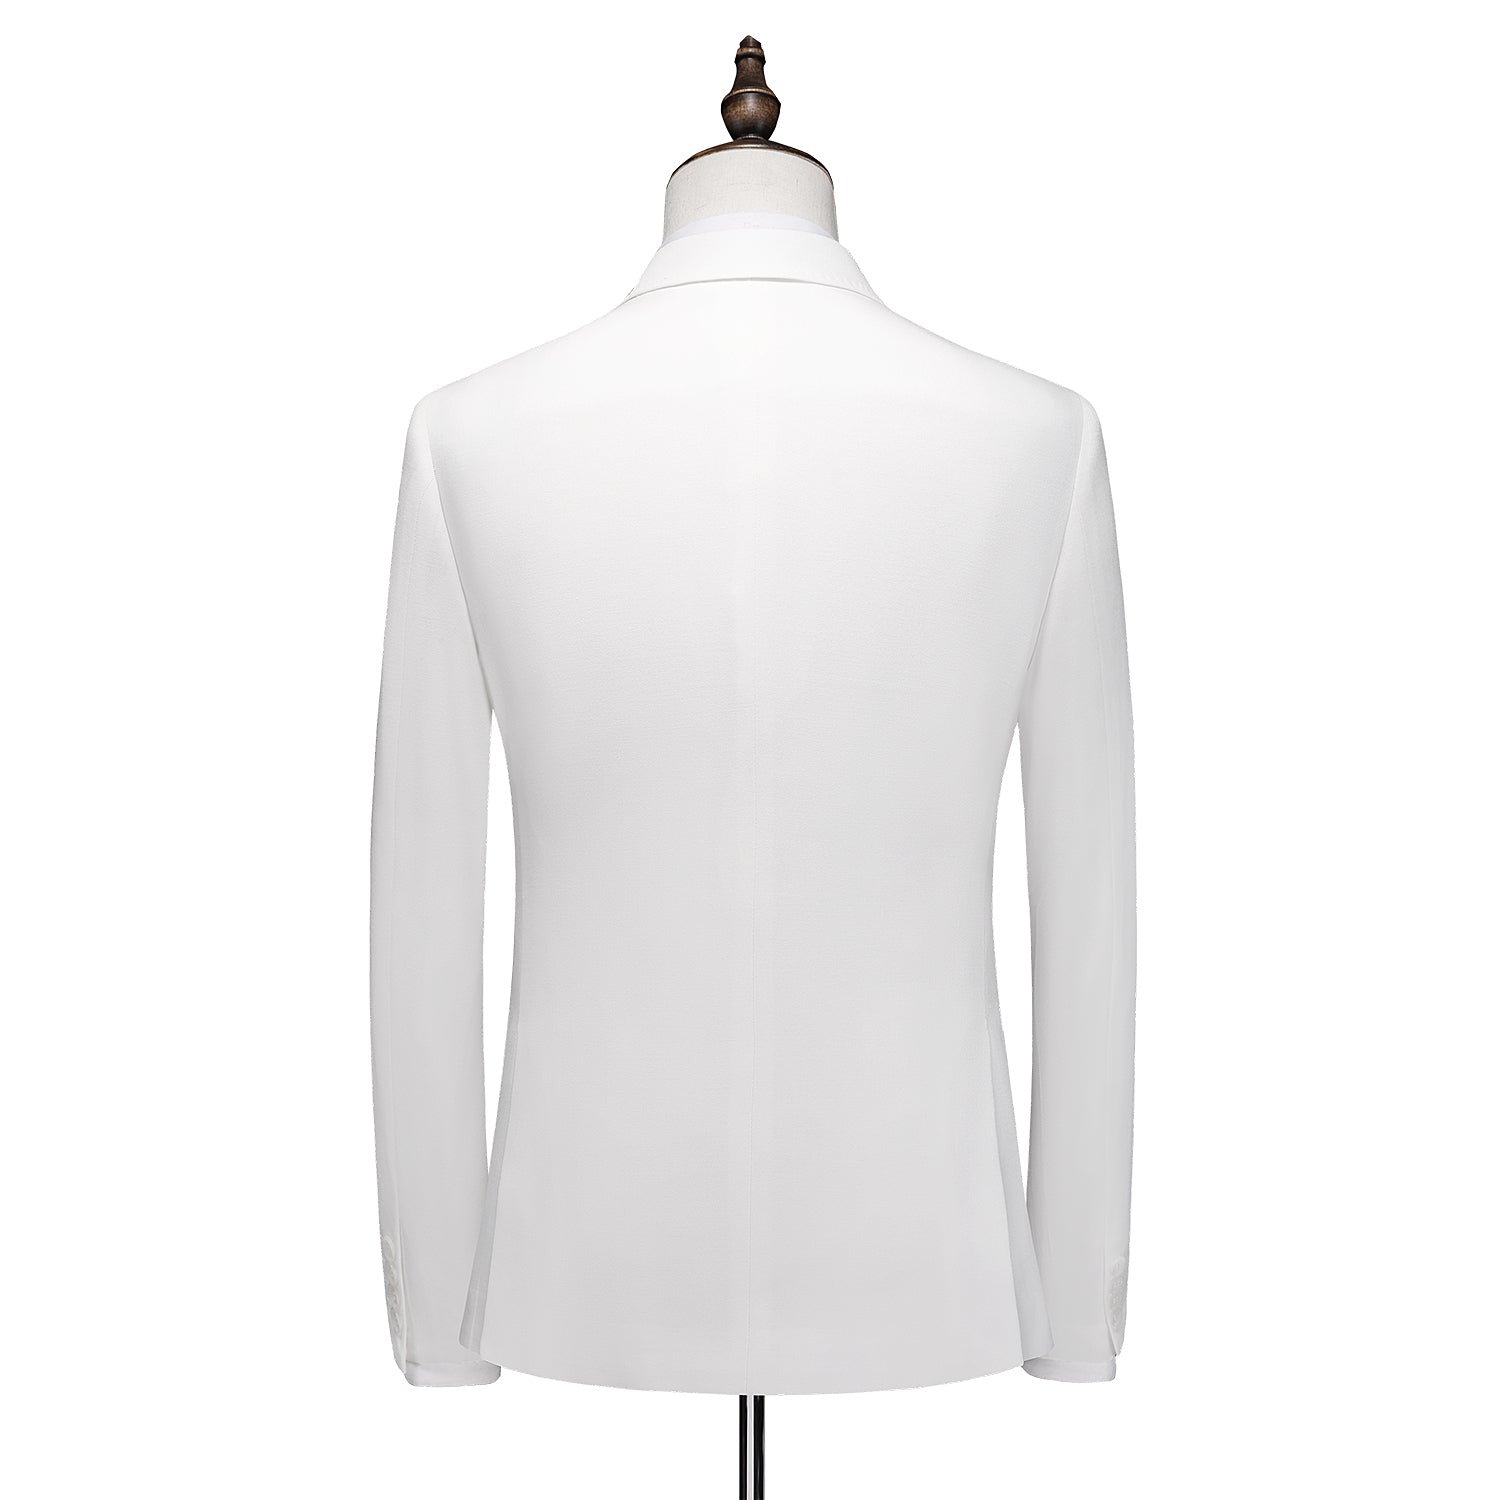 Men's 2 Piece Solid White Suit One Button